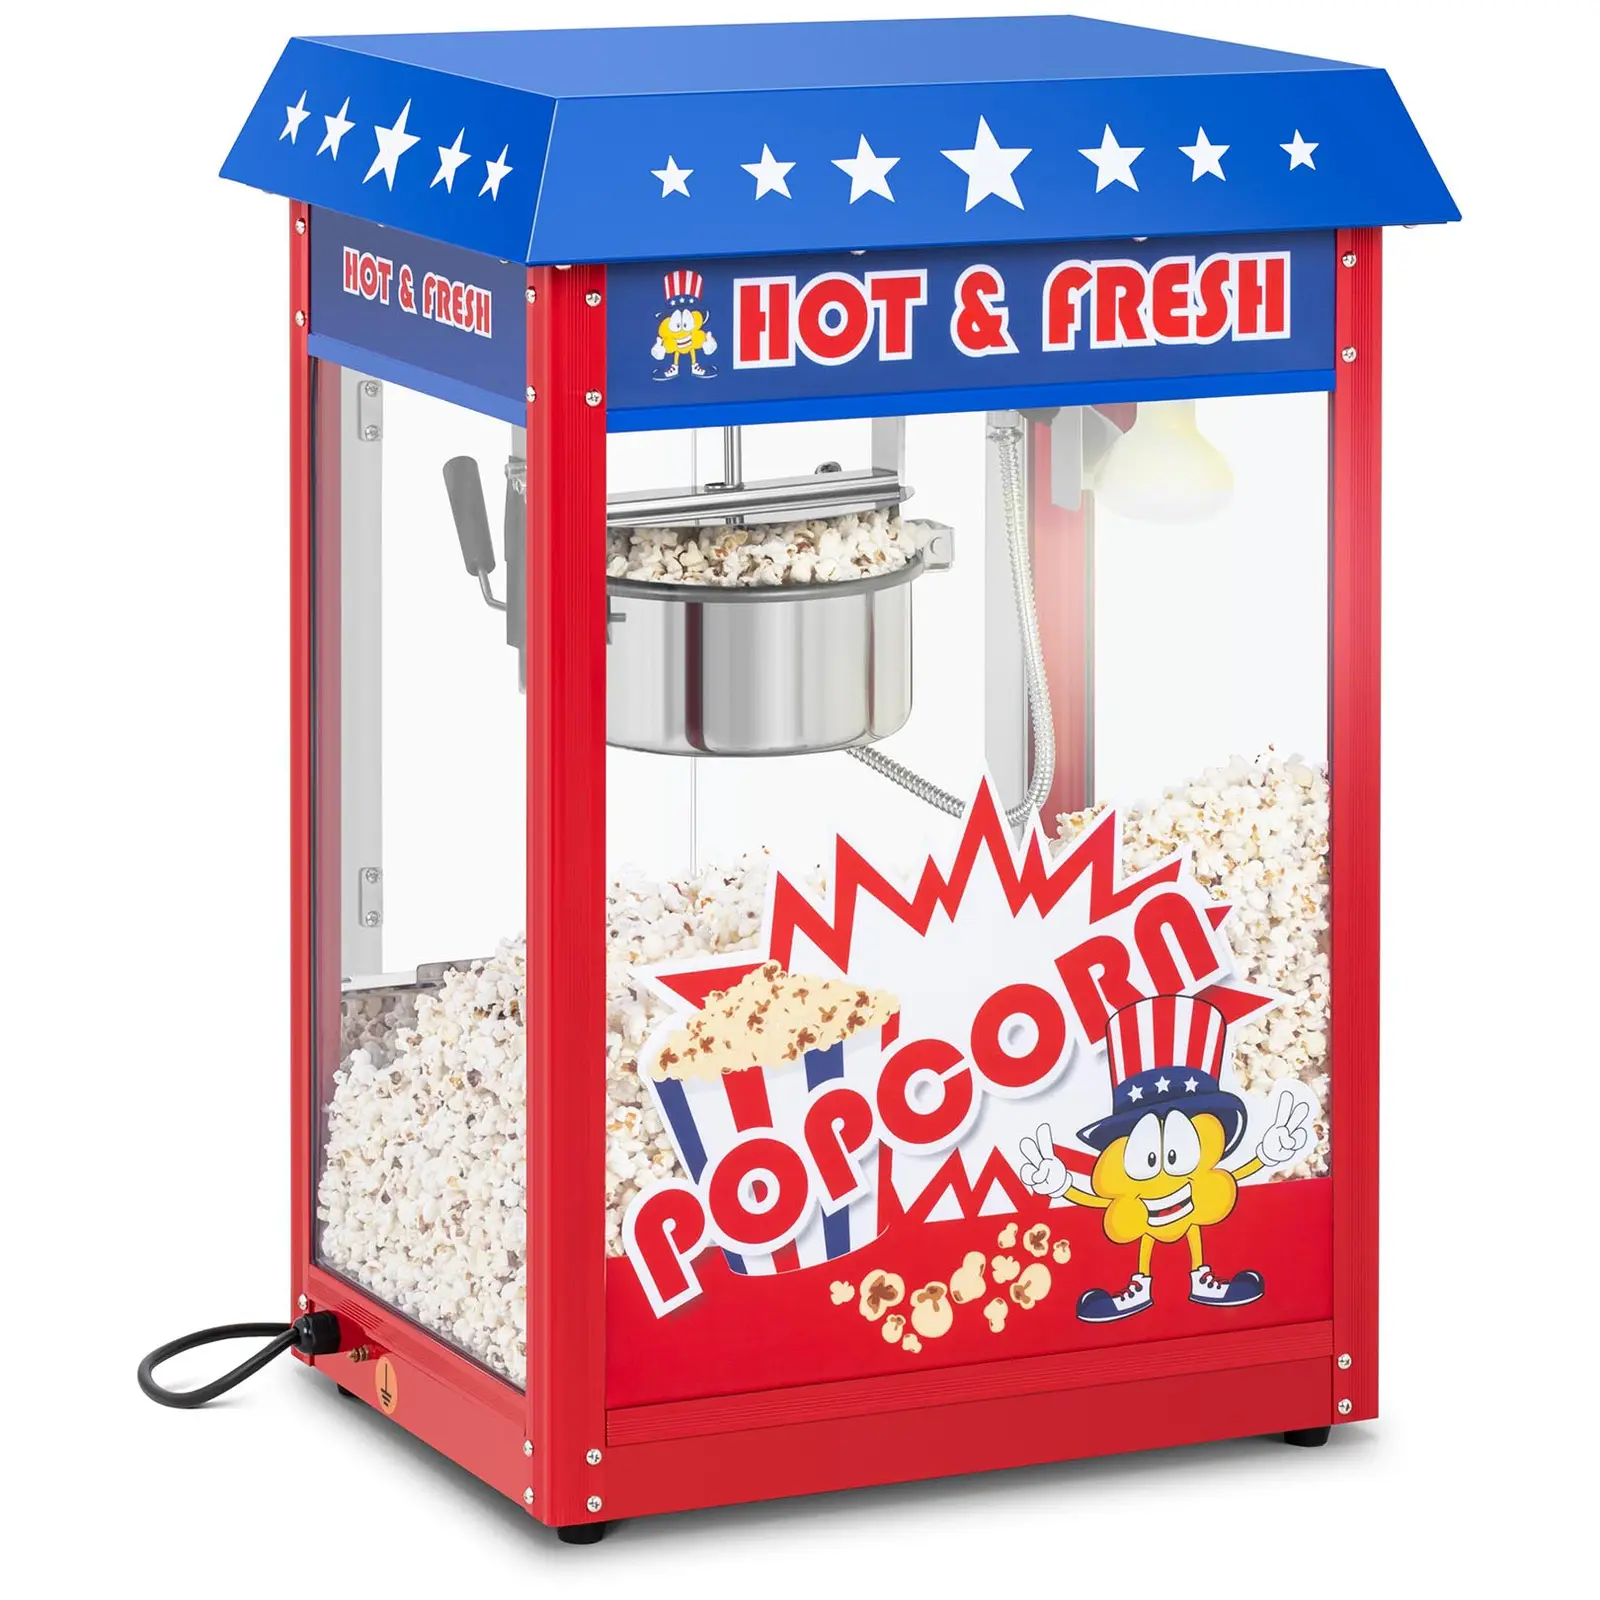 Popcornmaskin - Amerikansk design